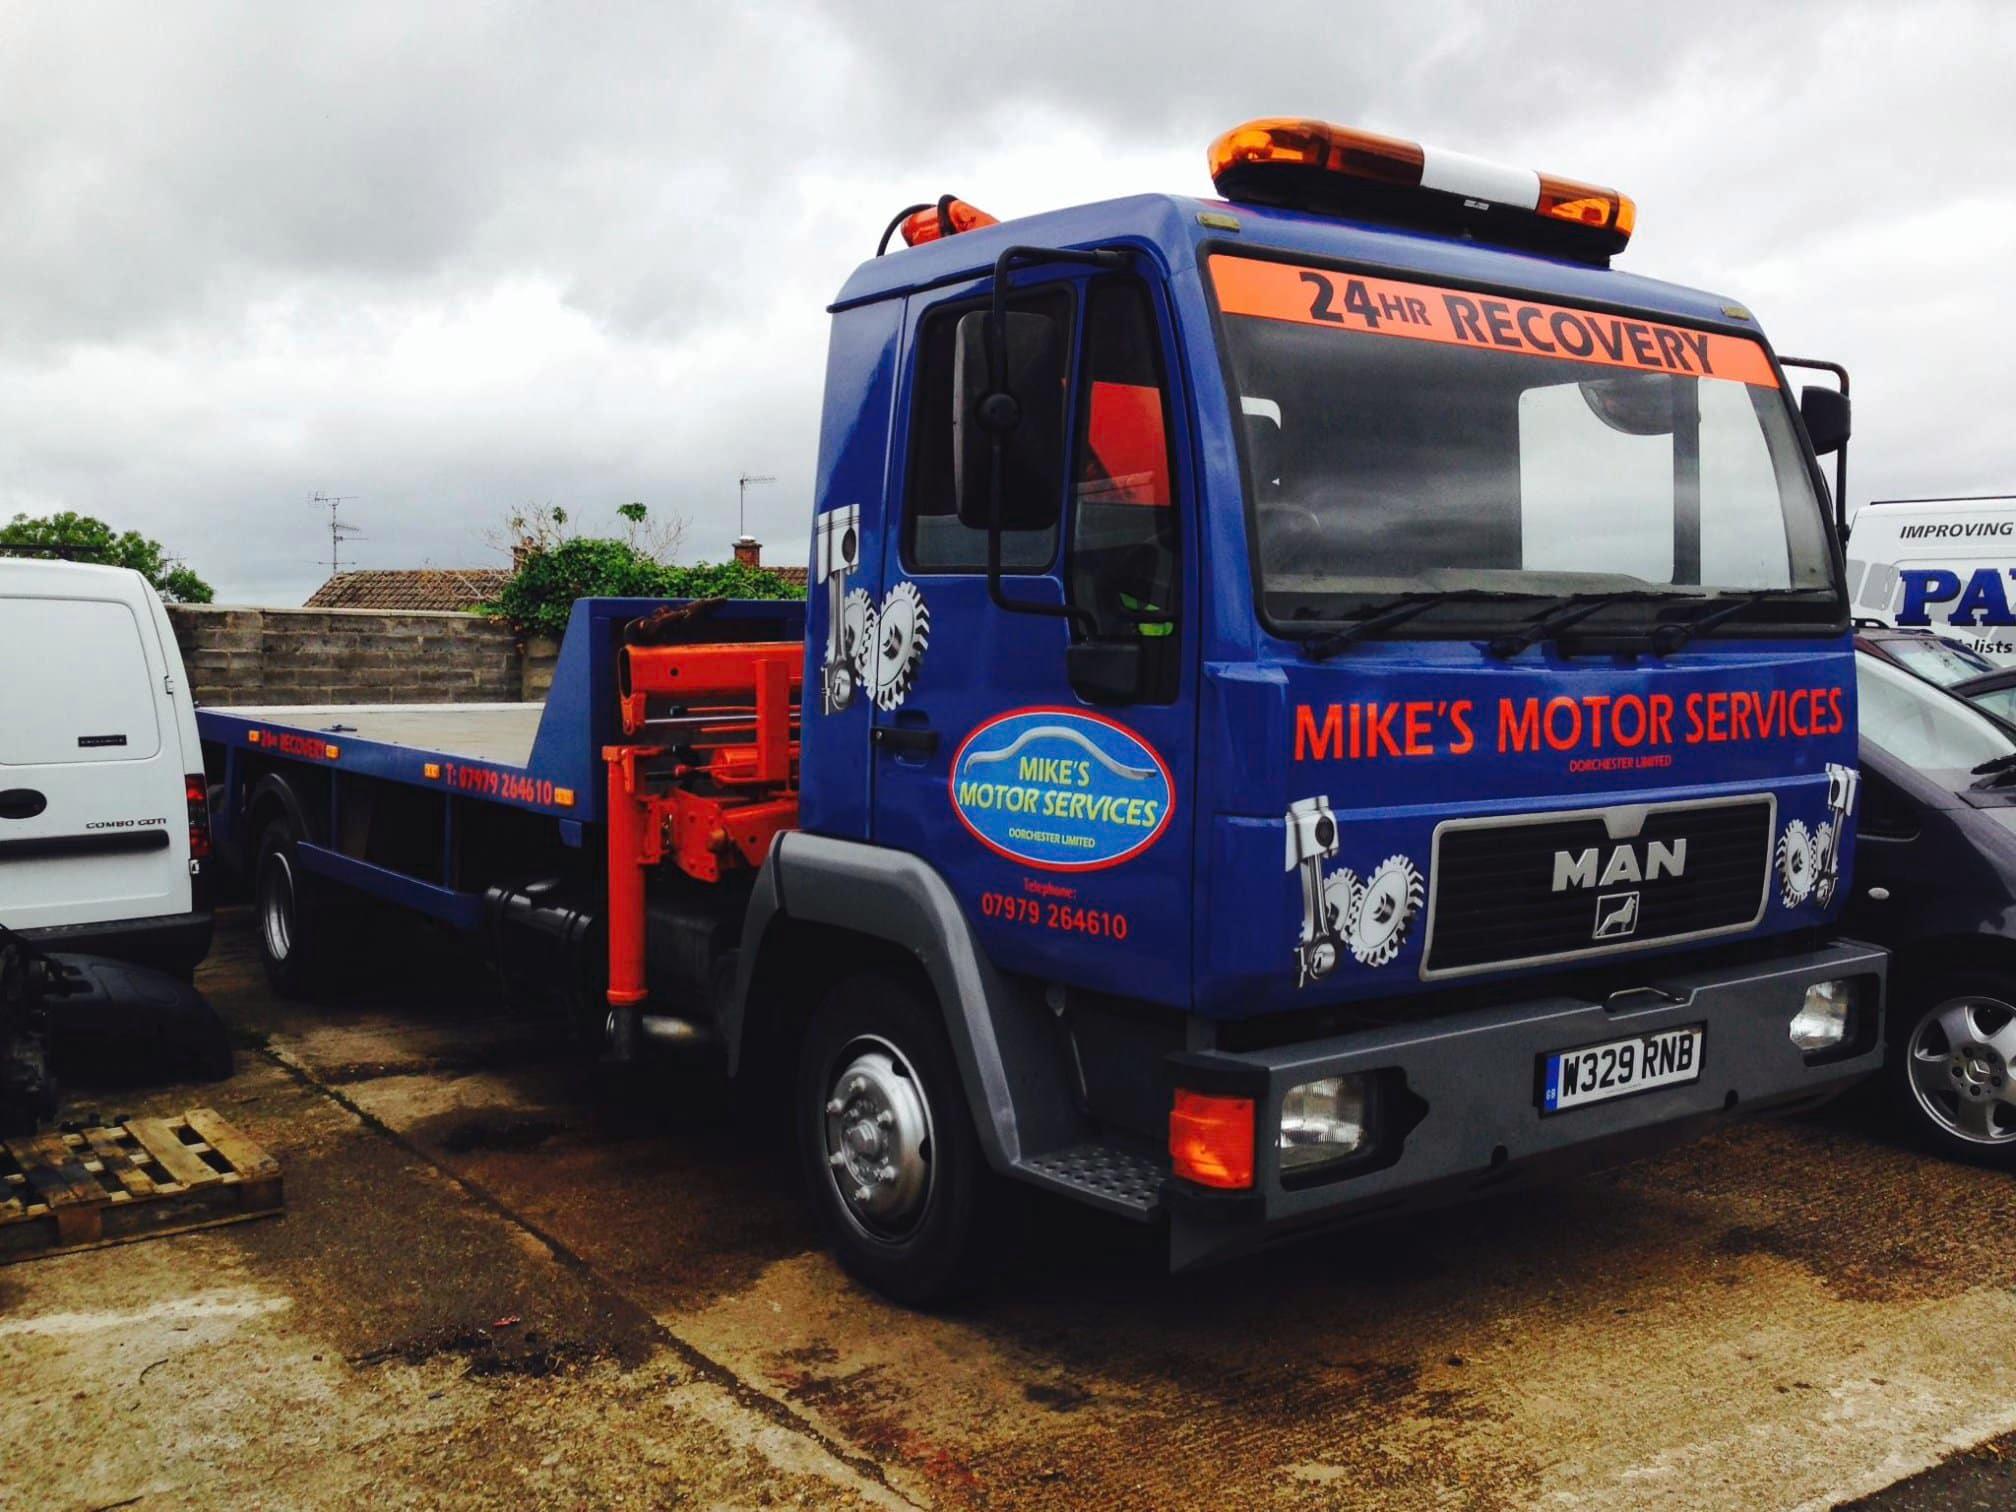 Images Mike's Motor Services Dorchester Ltd